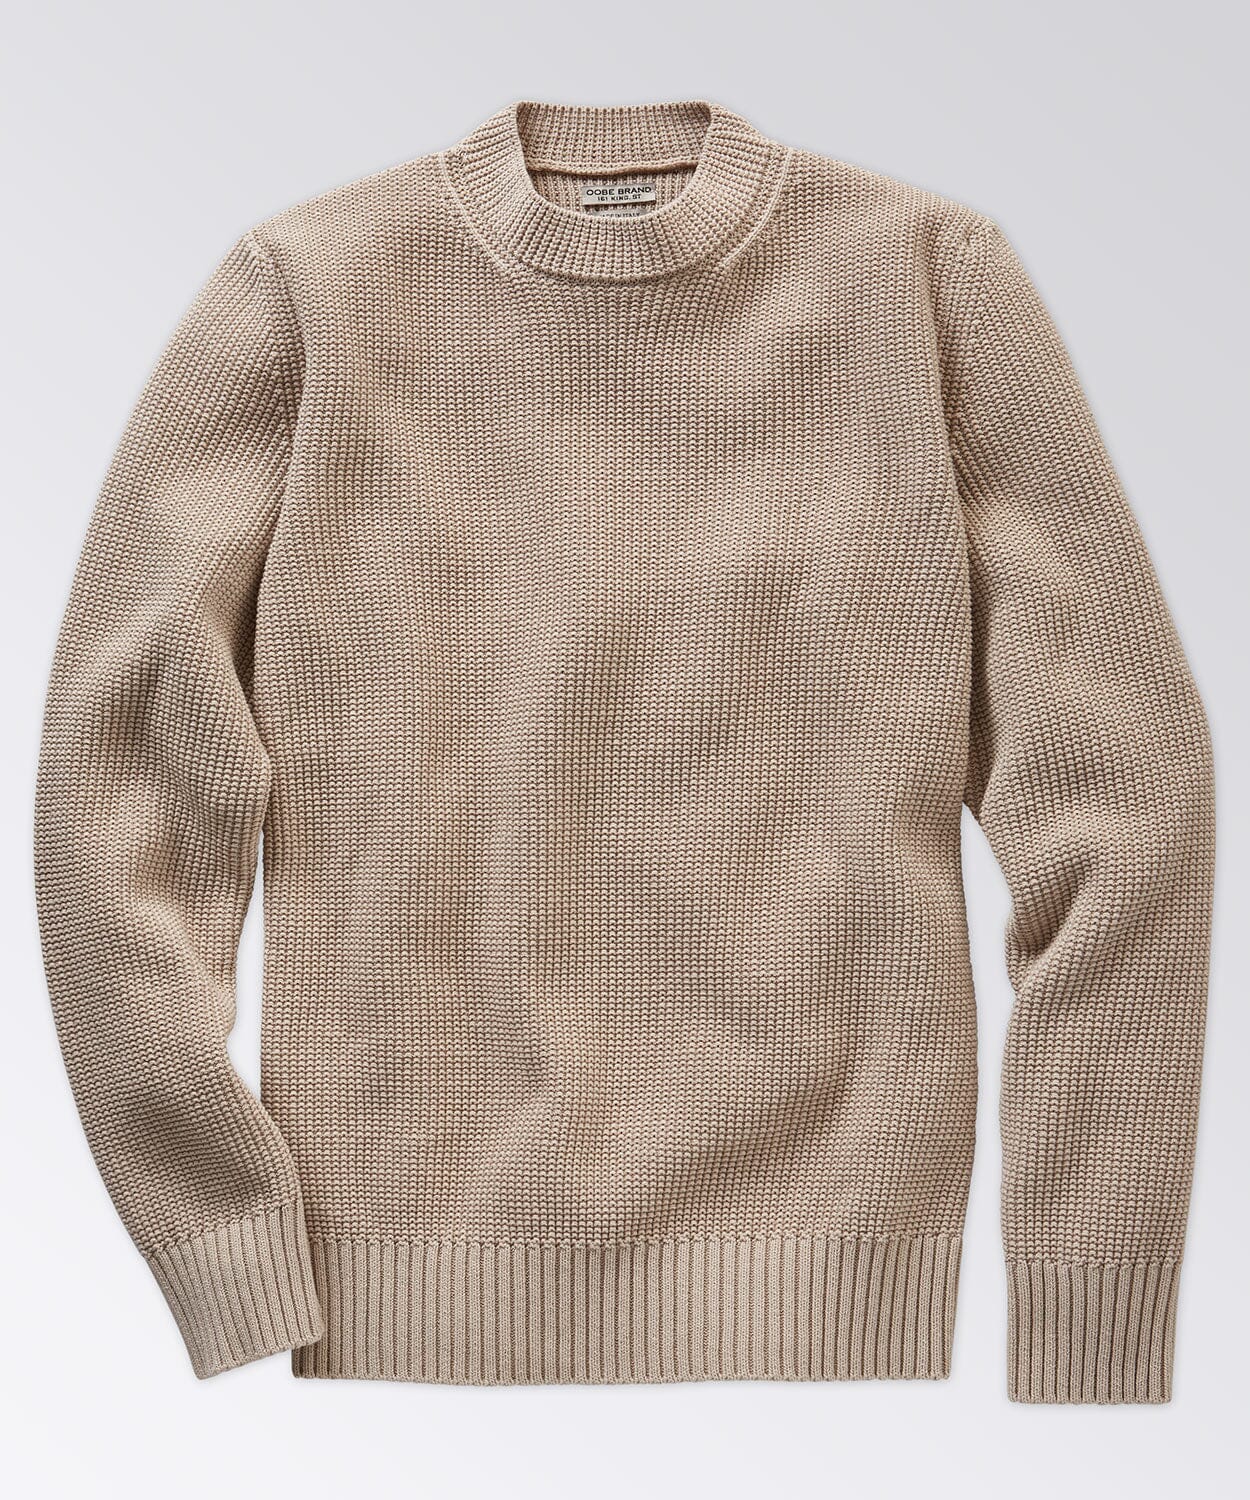 behandeling Correct investering Buy Best Men's Sweaters Online | Wool Knit Cardigans | OOBE BRAND